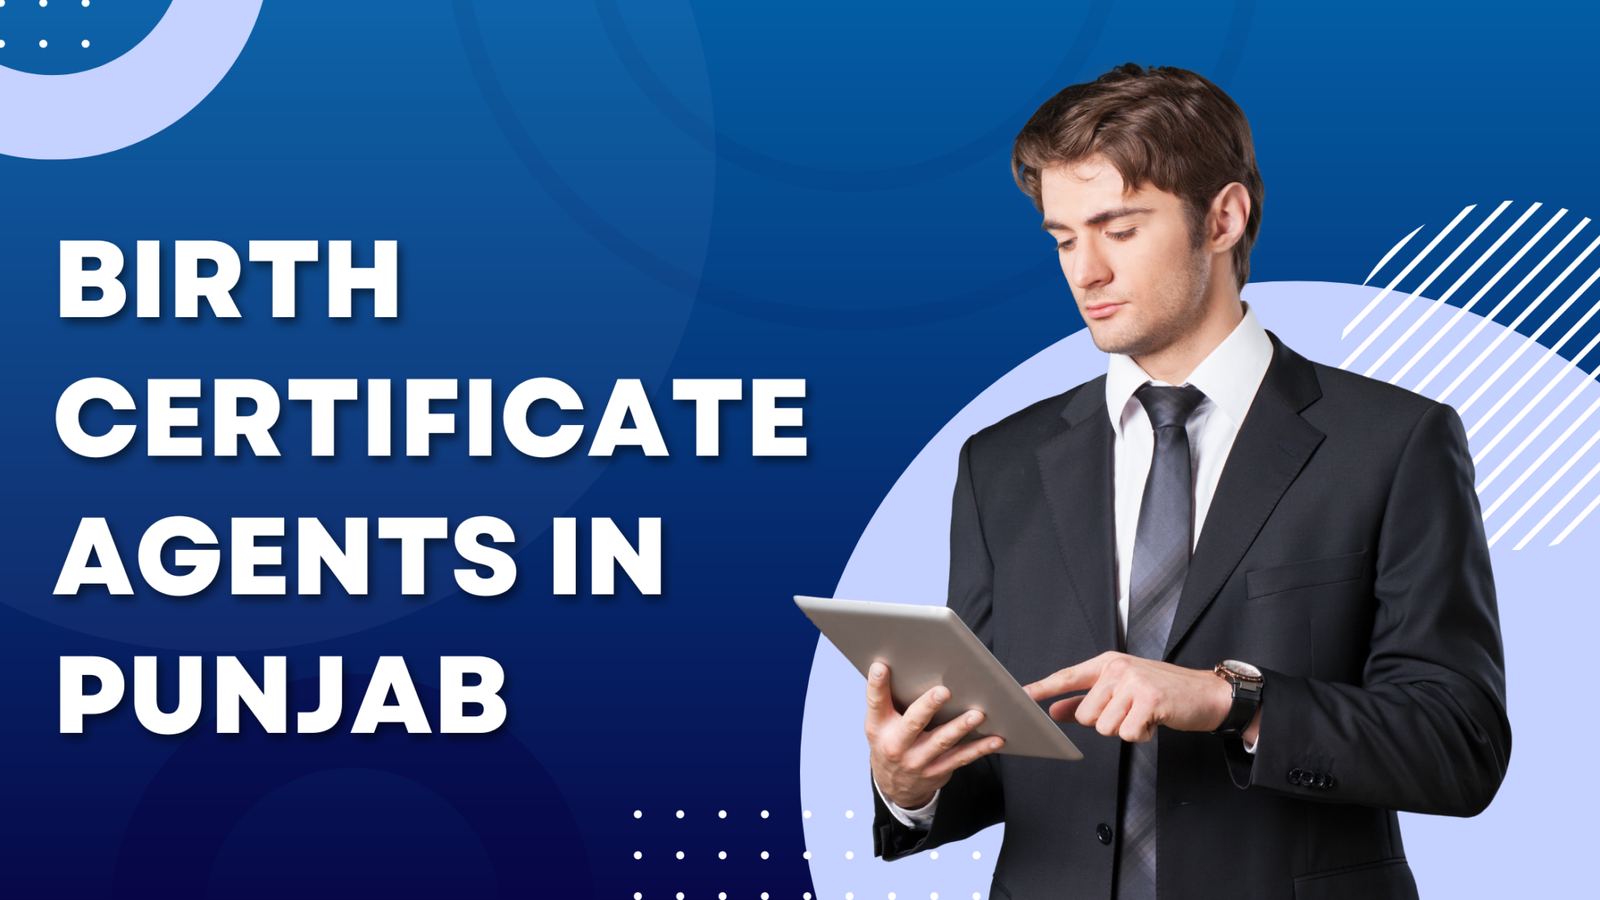 birth-certificate-agents-in-punjab-digital-wheel